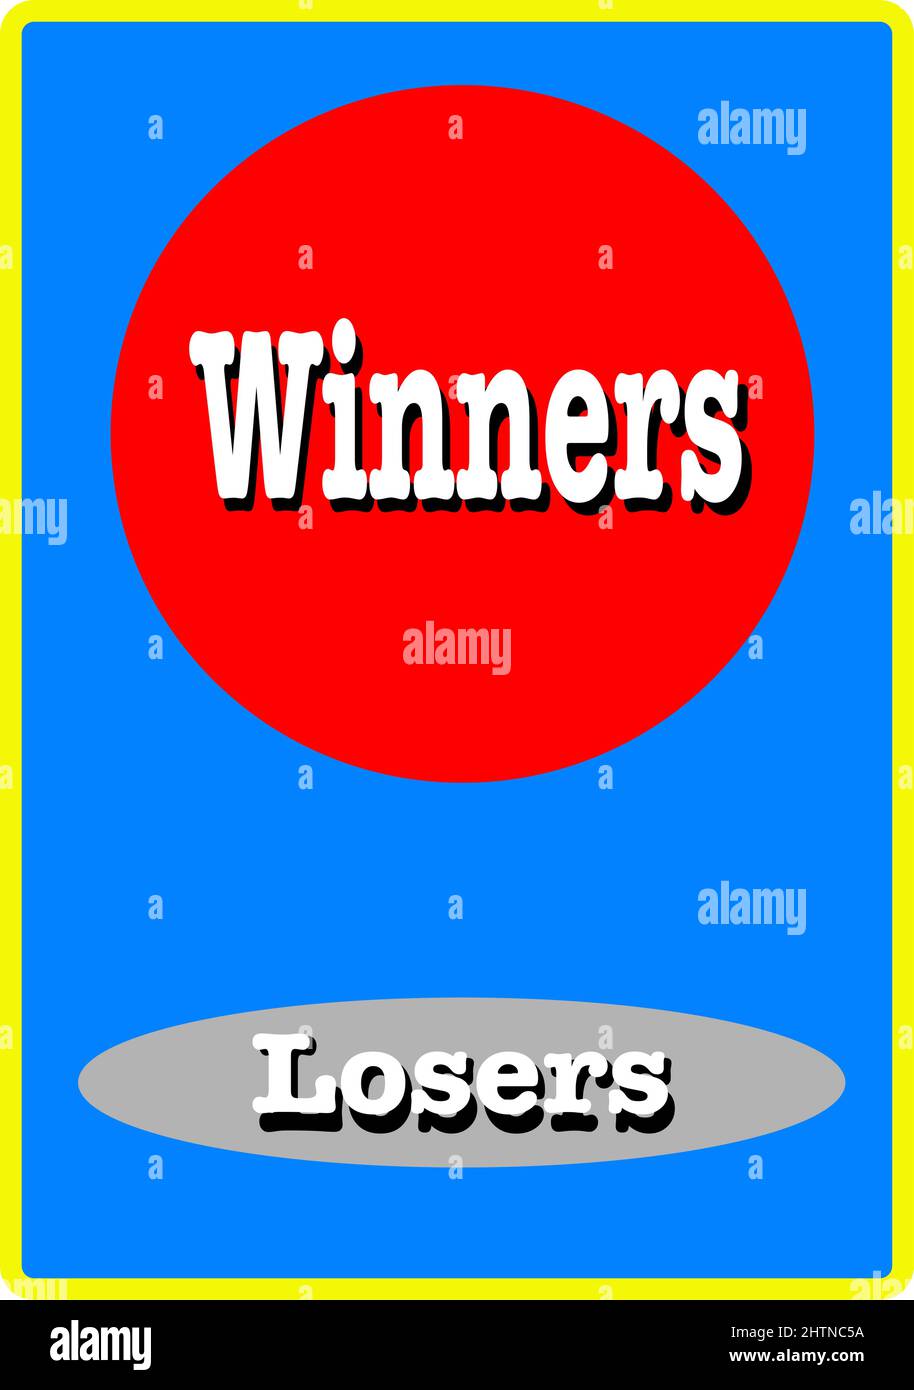 Gewinner Verlierer Glück Konzept Stock Vektor